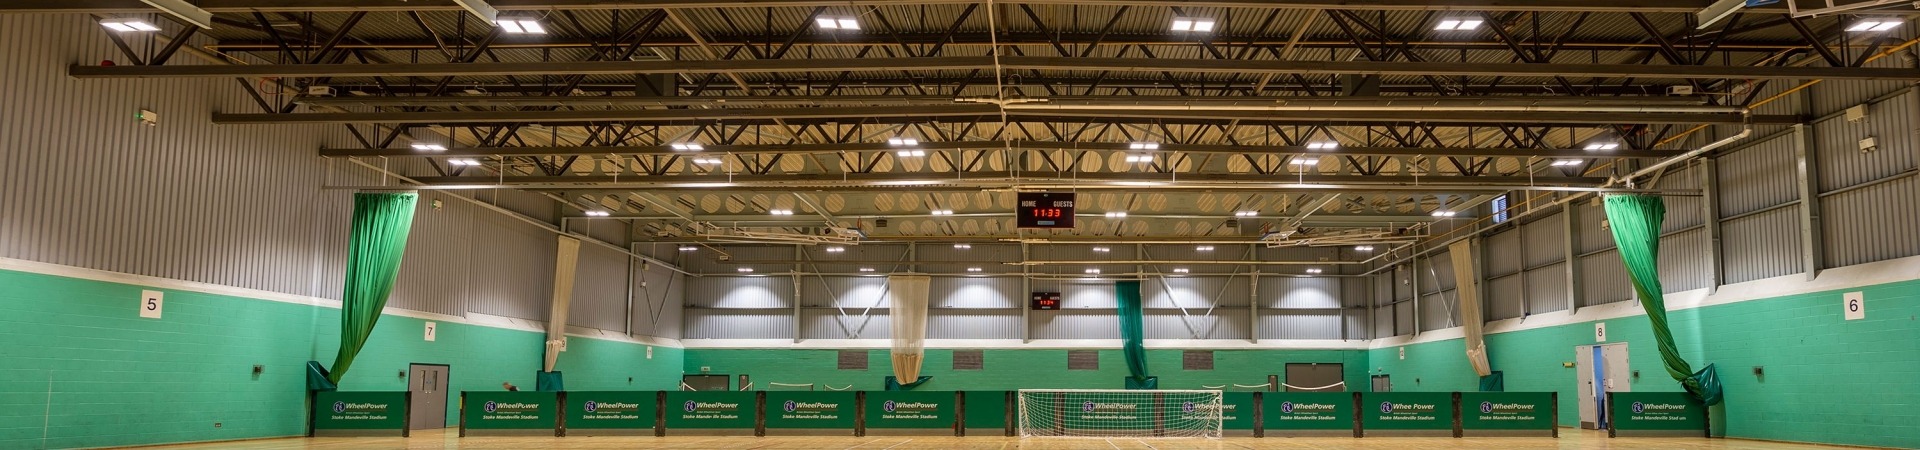 Tamlite Stoke Mandeville Stadium Aylesbury Sports LED Lighting Case Study header